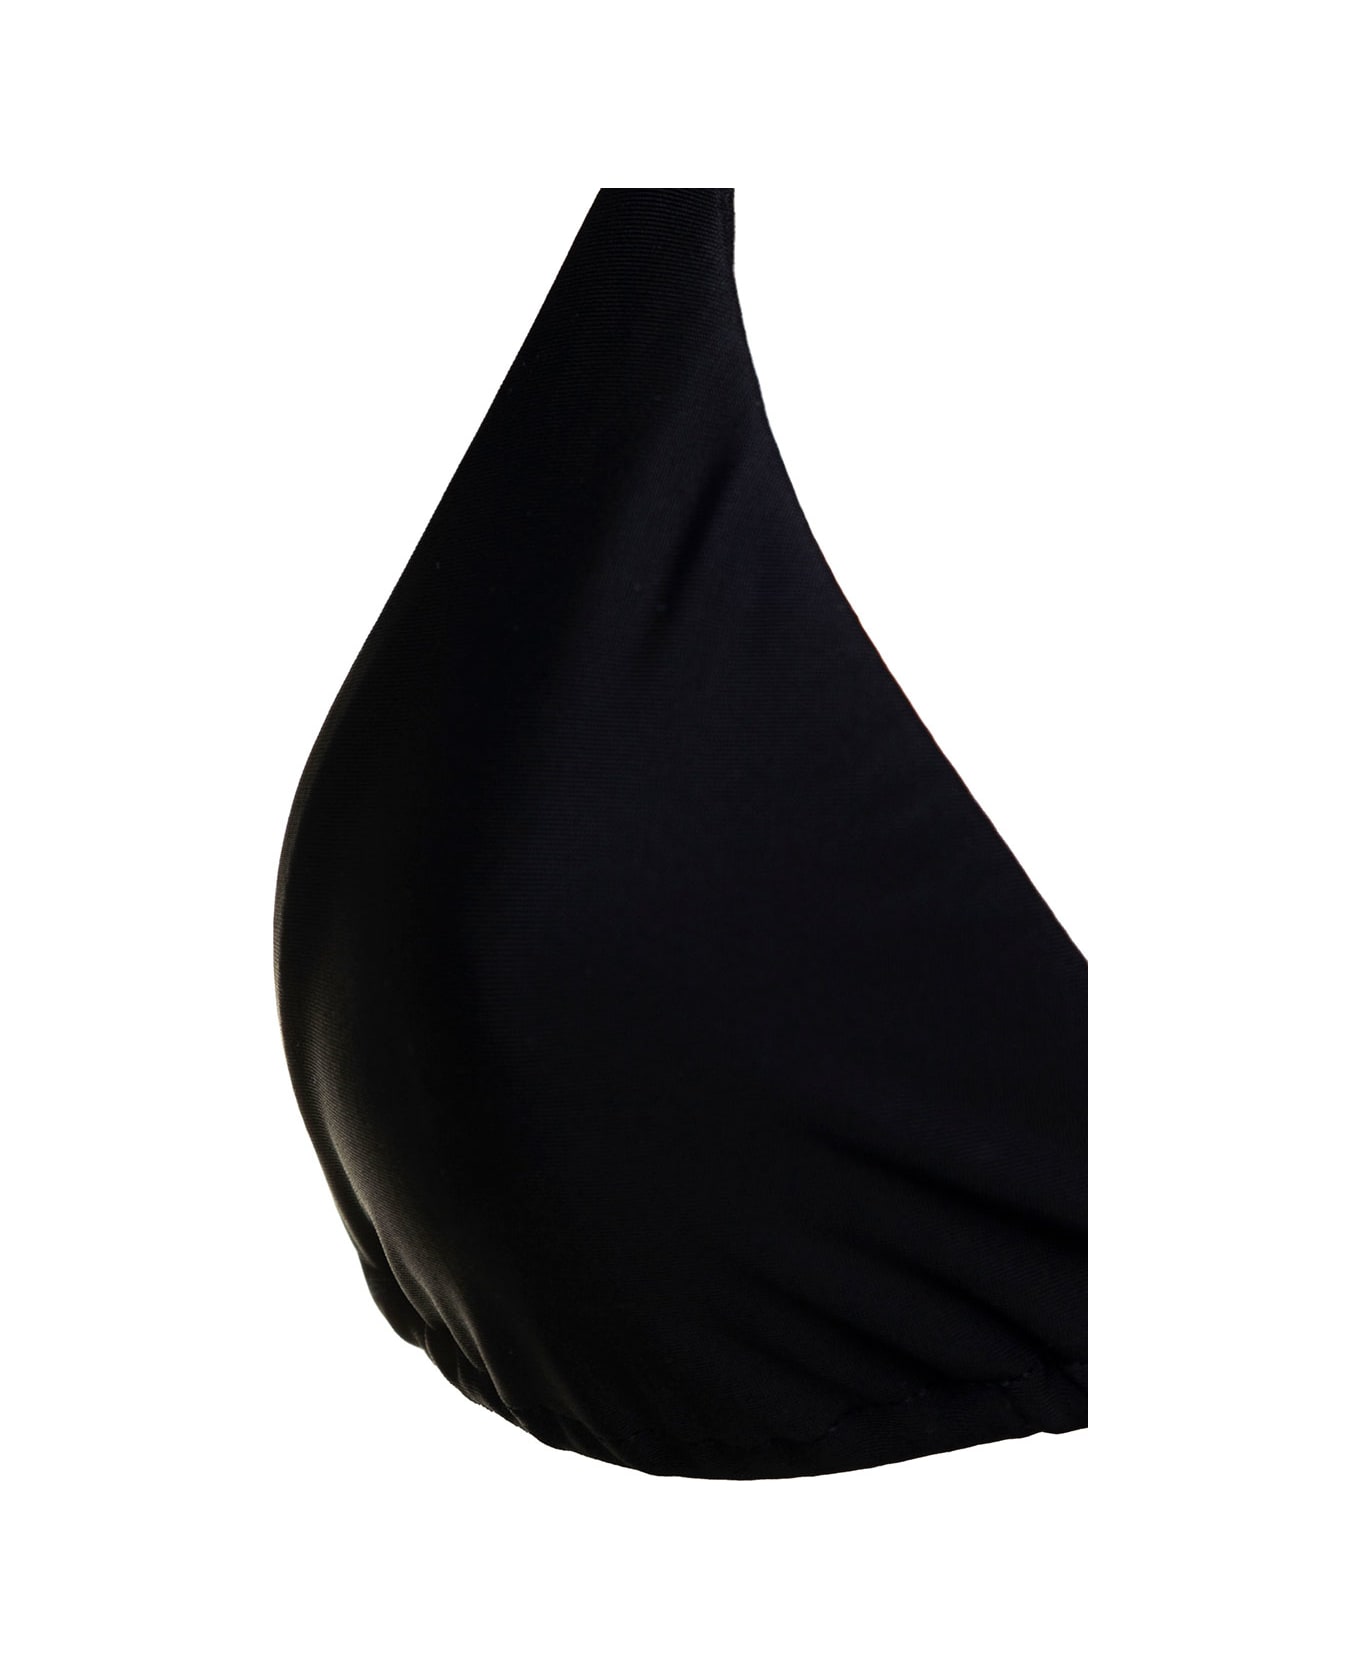 MATTEAU Woman's Tringolar Stretch Fabric Bikini Top - Black